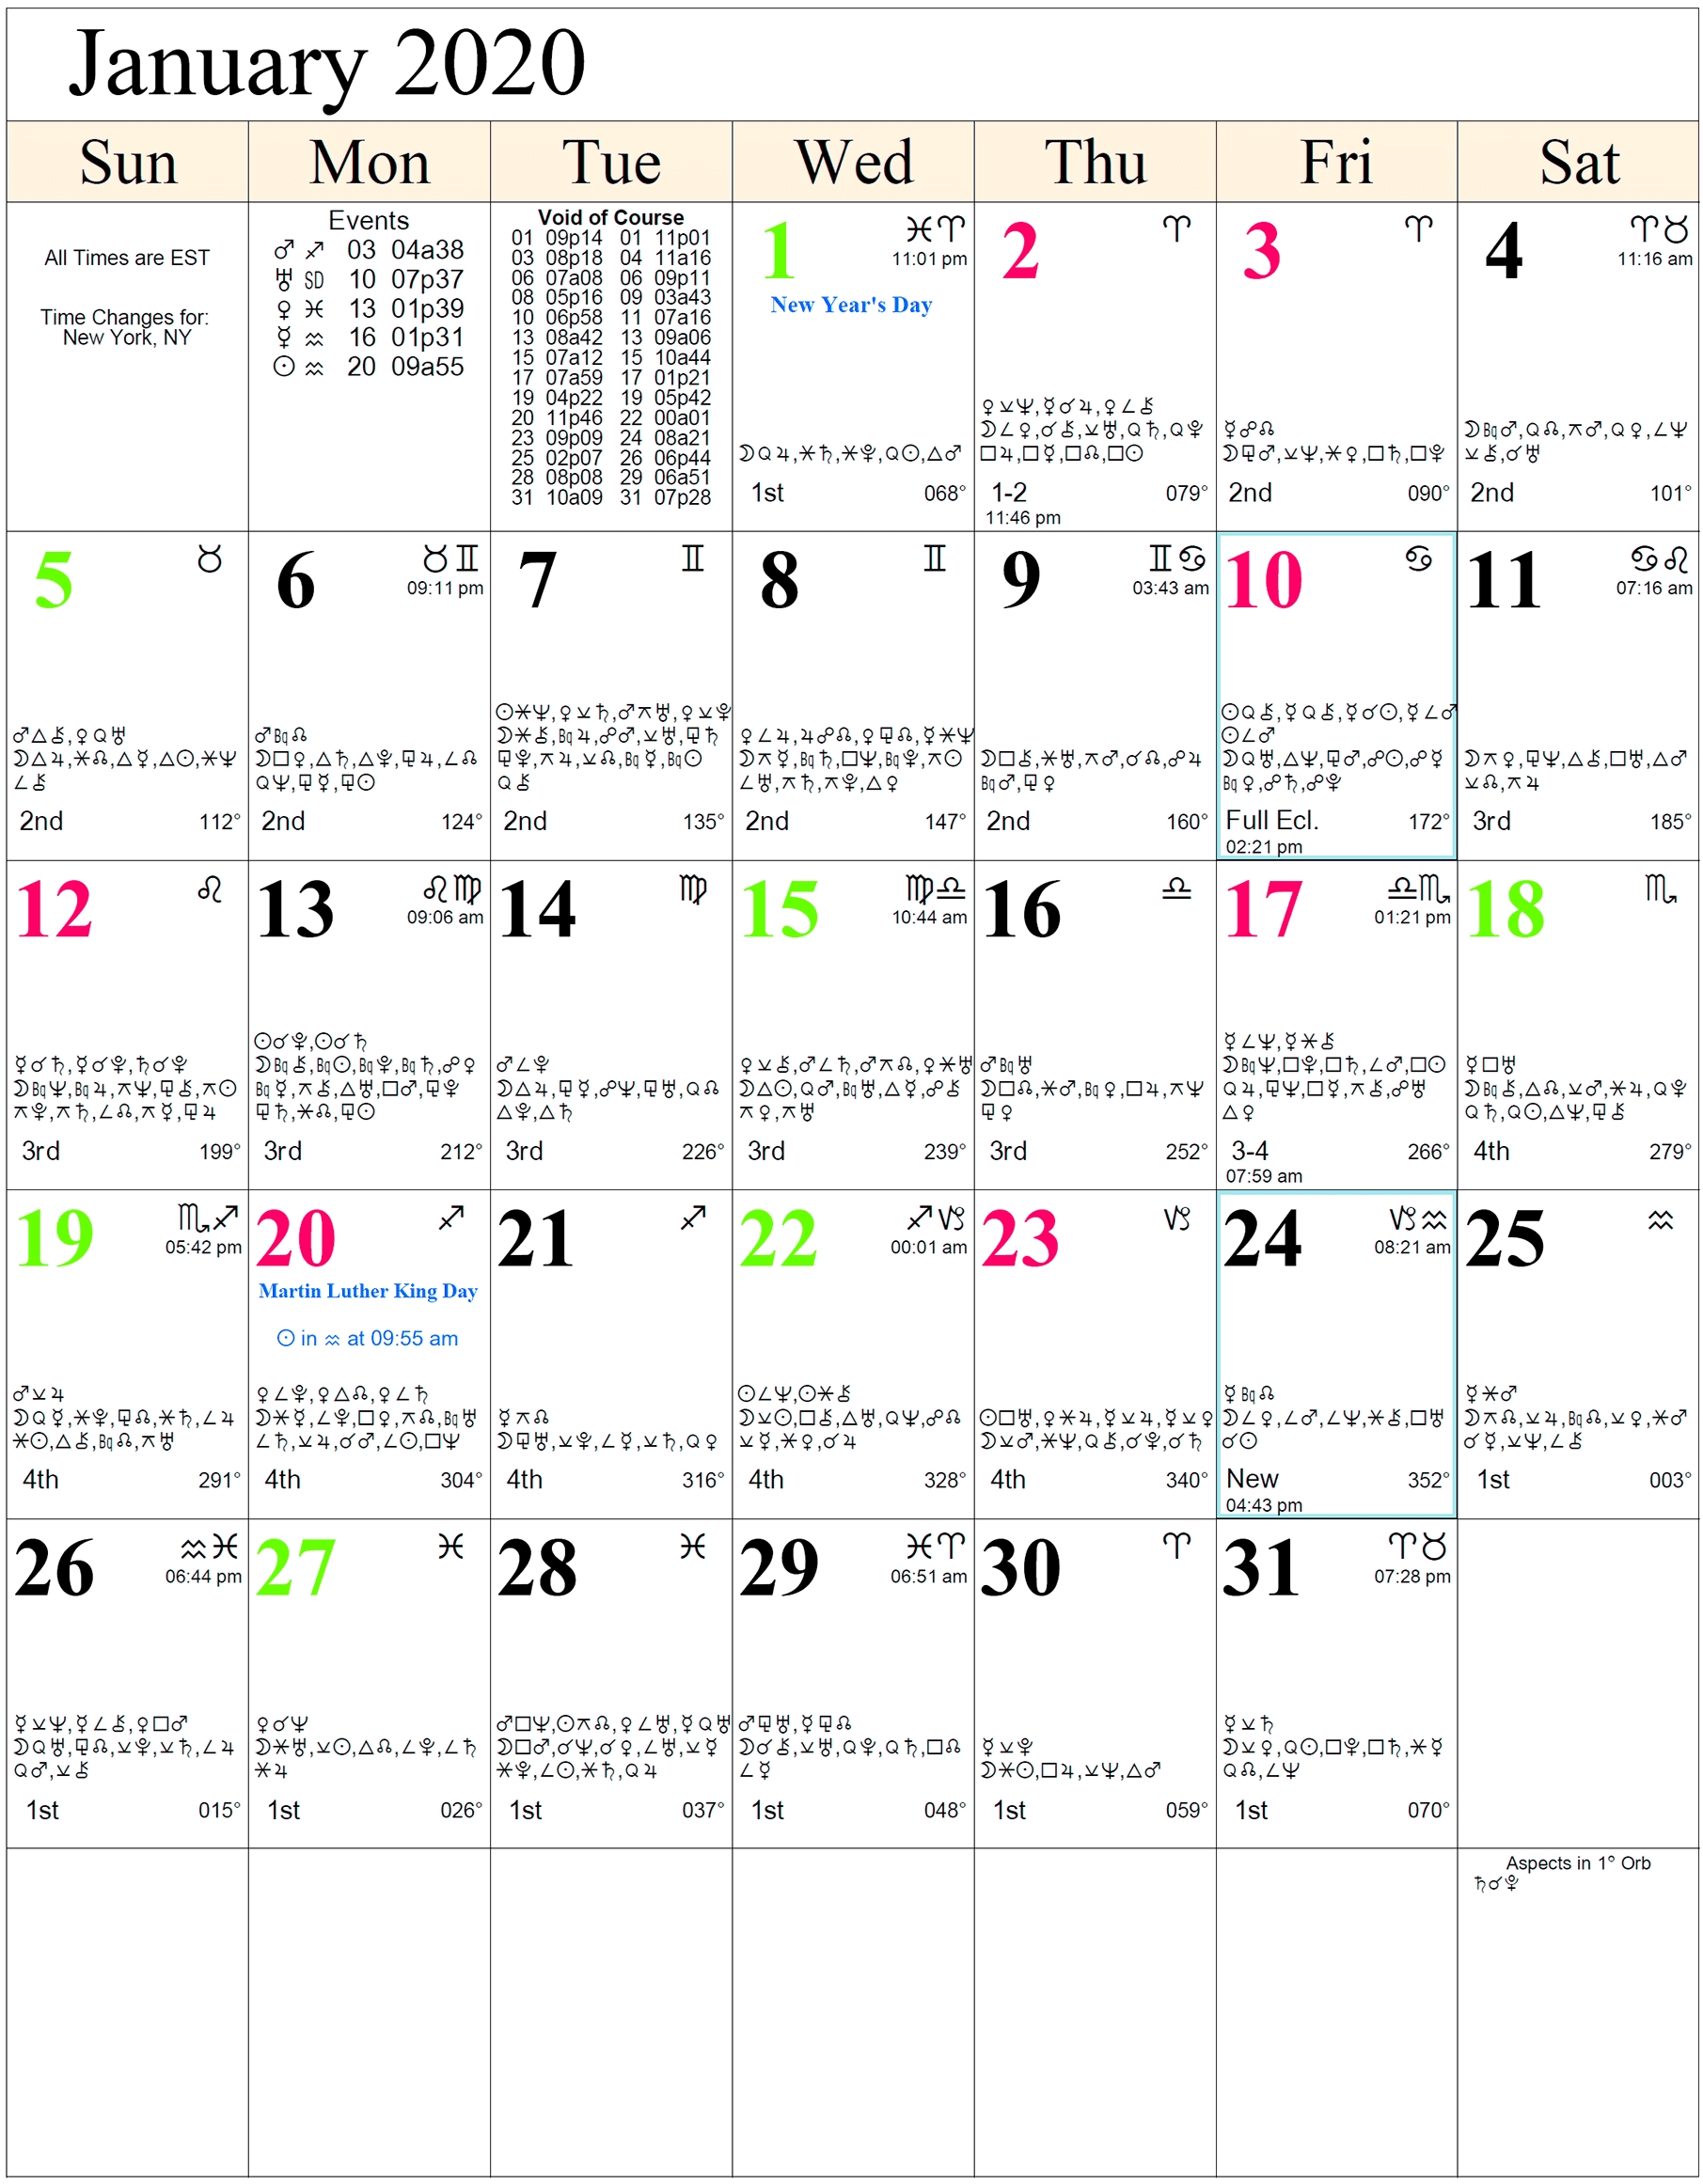 Monthly Astrology Calendars Perky Mercury Retrograde Calendar 2020 Free